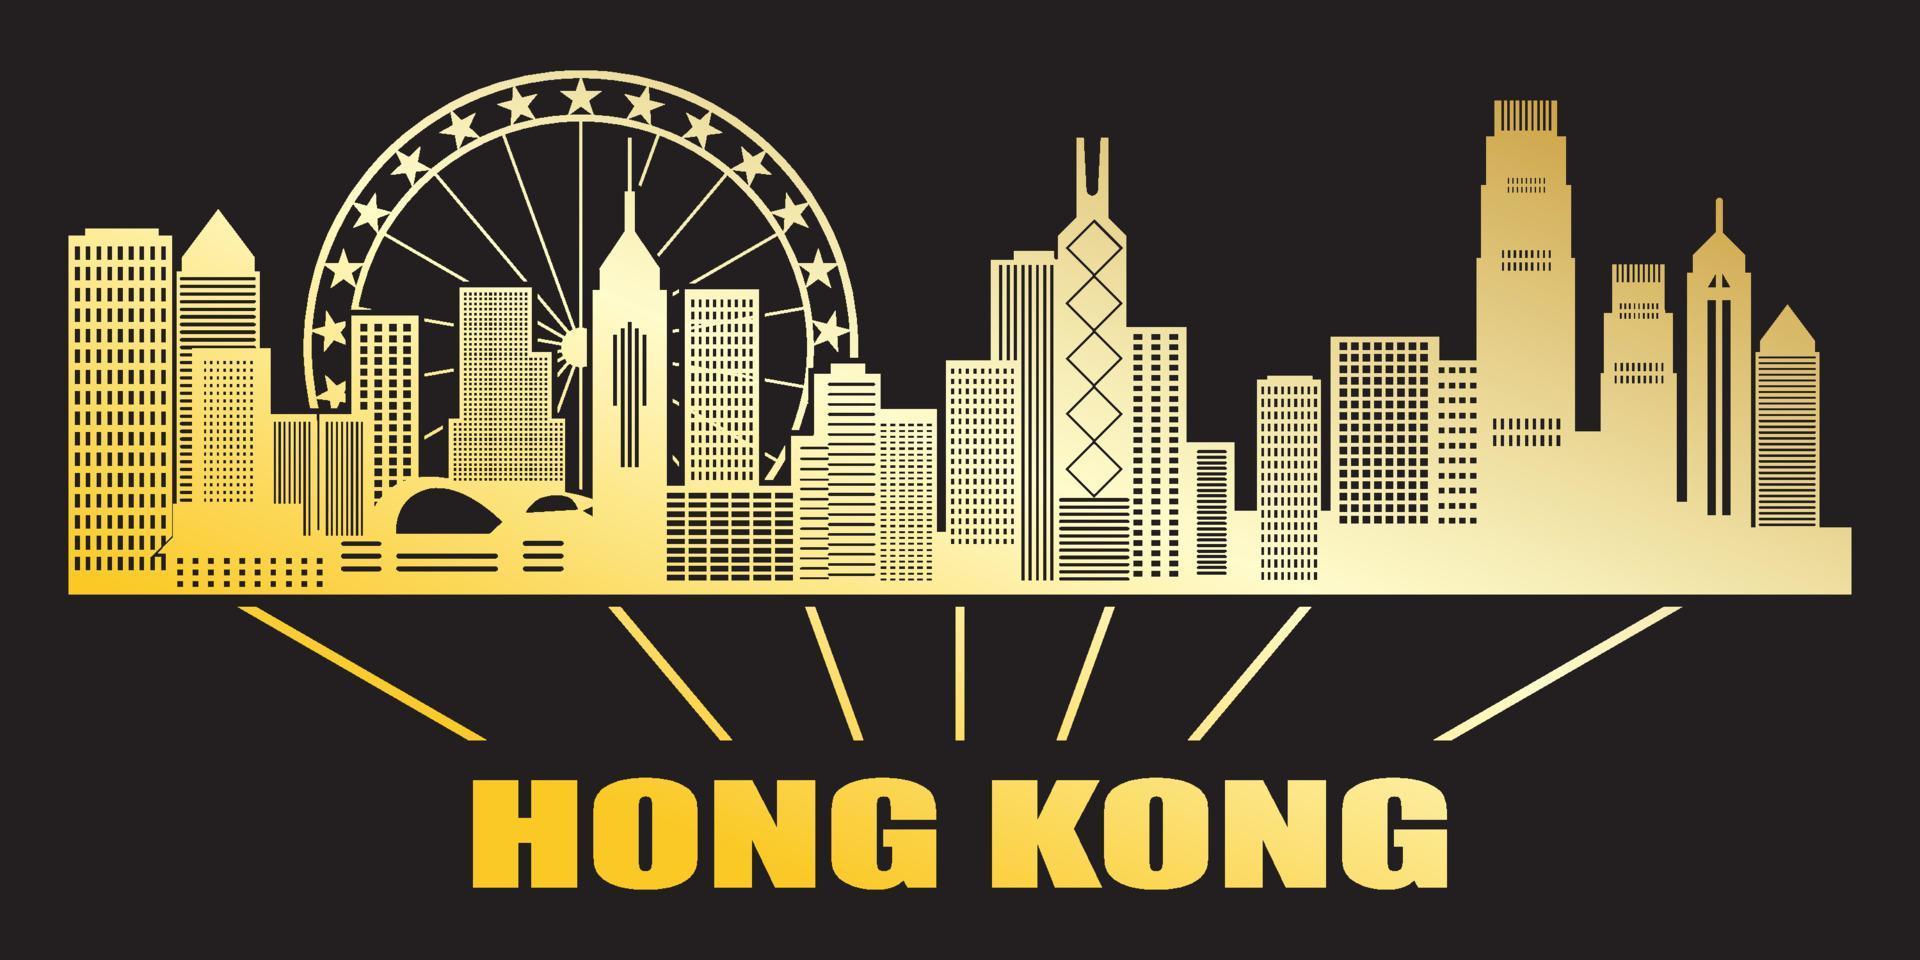 vista da cidade de hong kong com estilo de corte de papel vetor